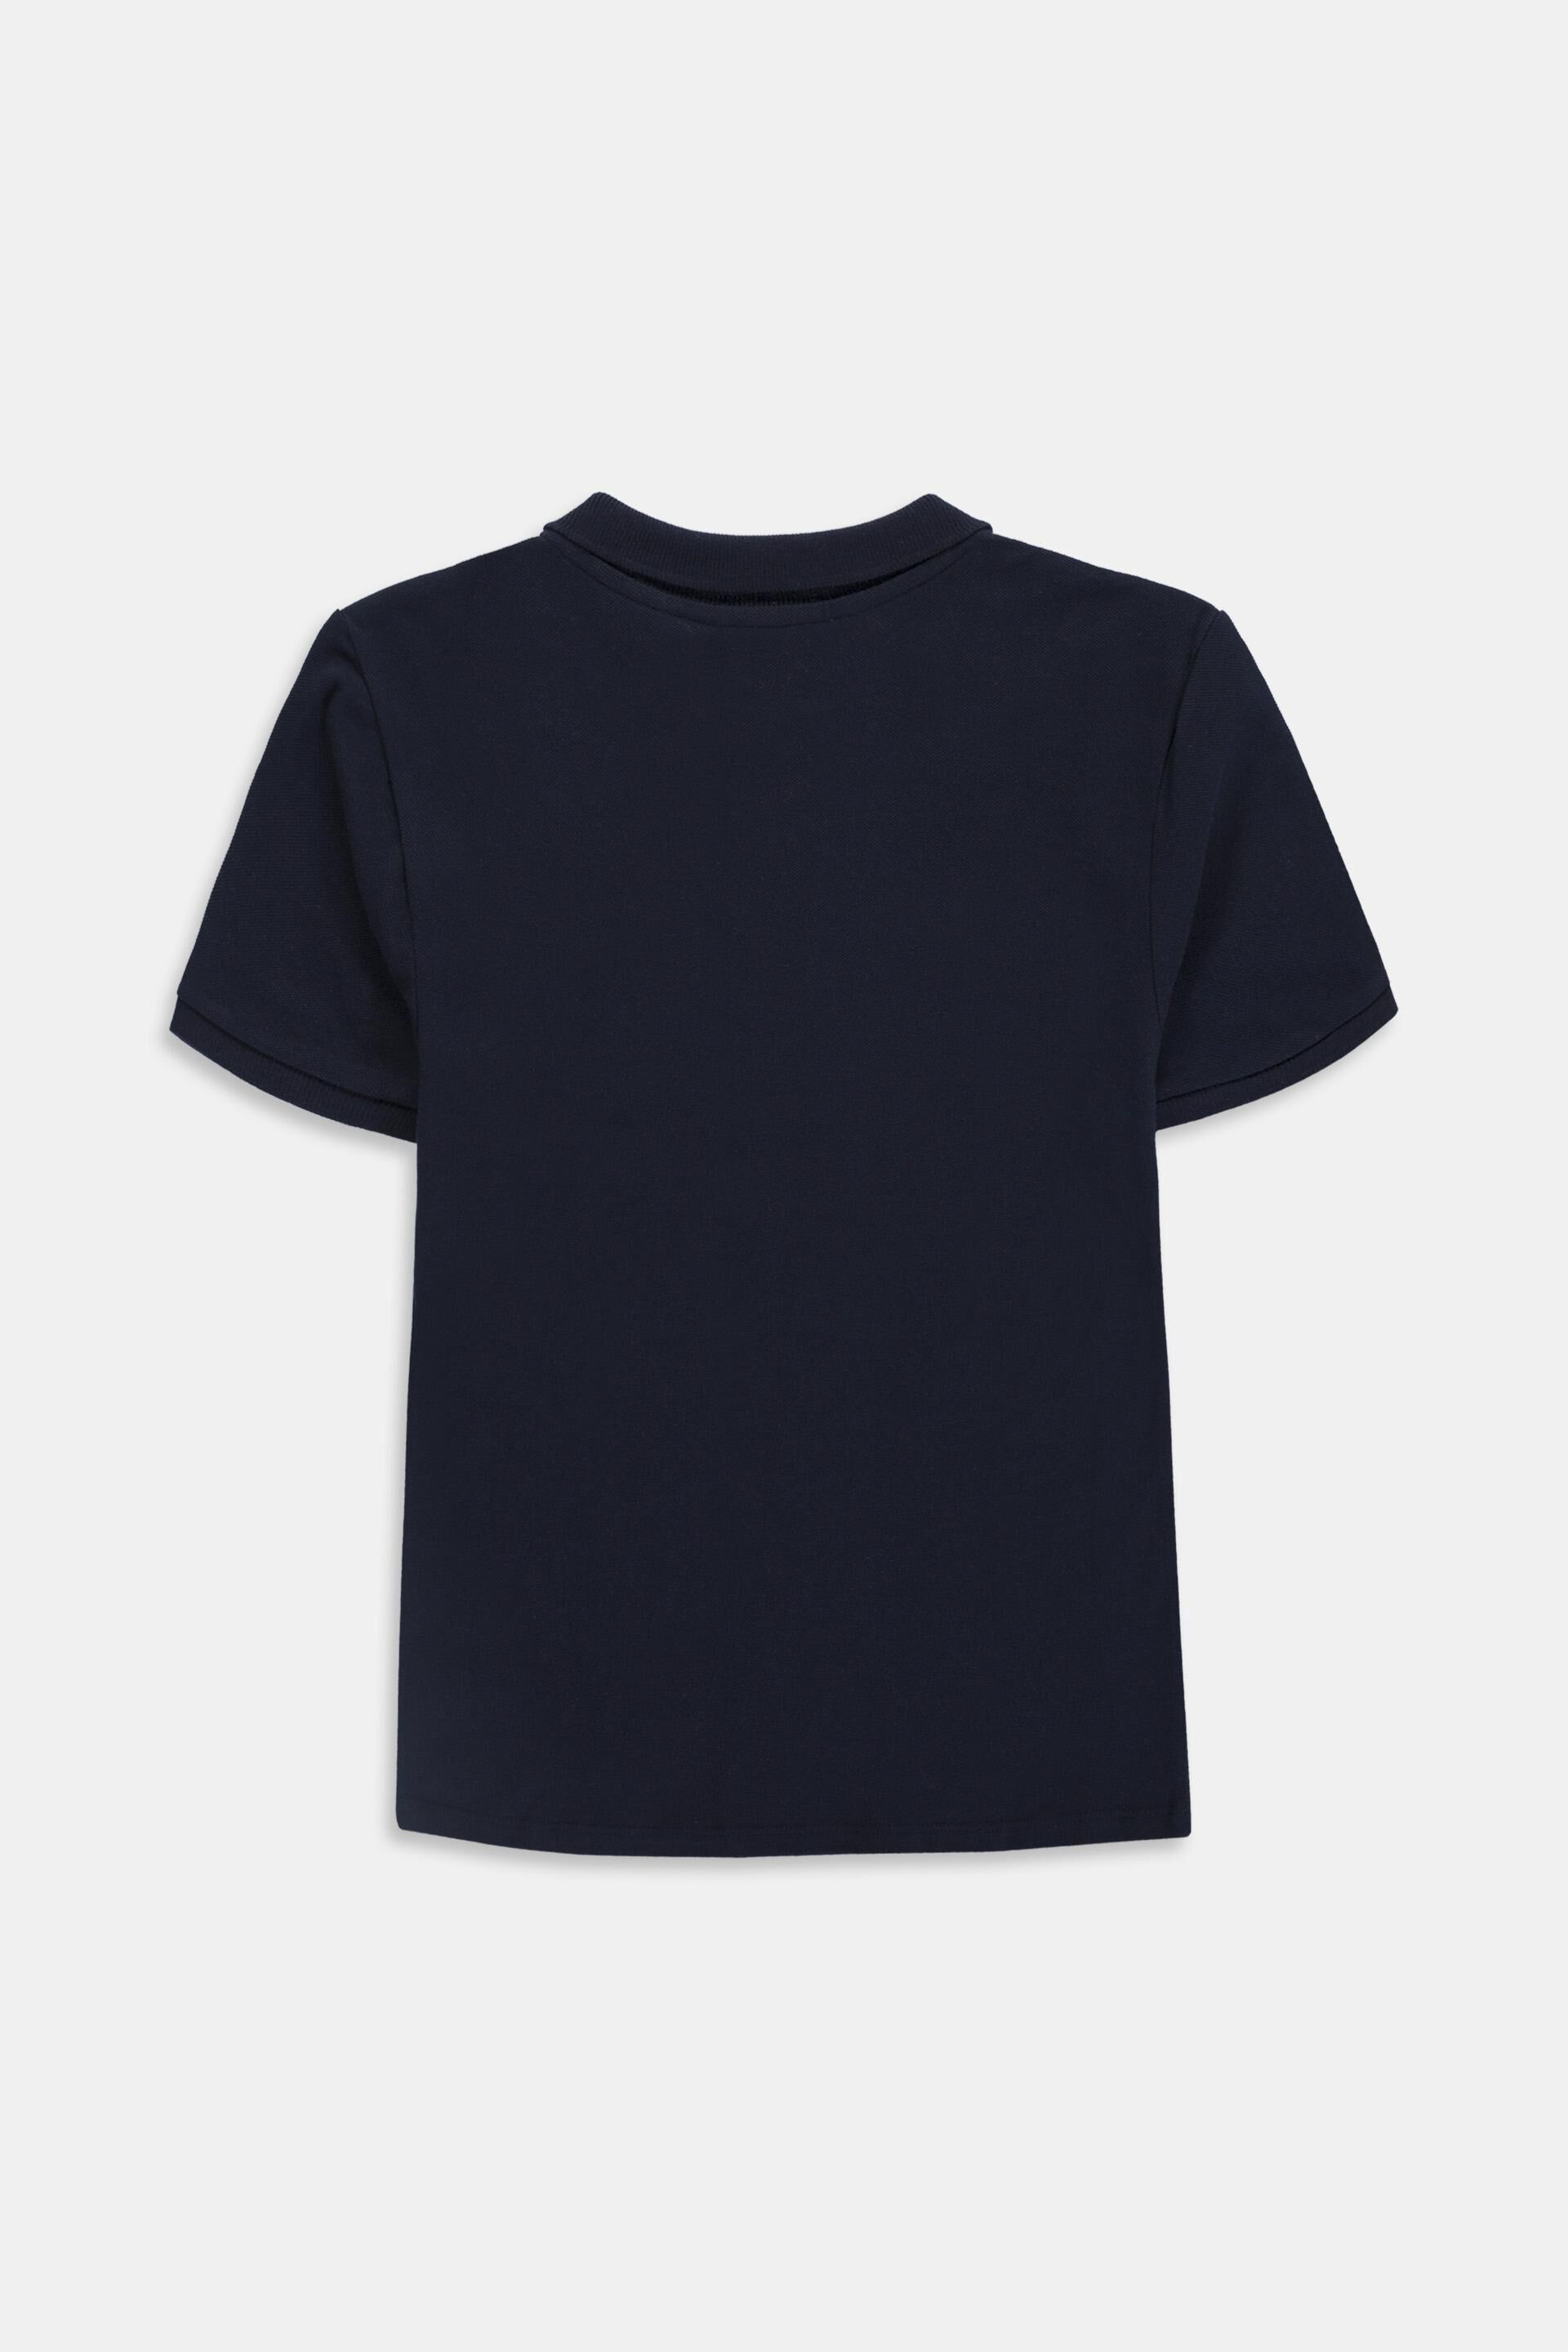 Esprit aus Basic-Piqué-Poloshirt 100 % Baumwolle